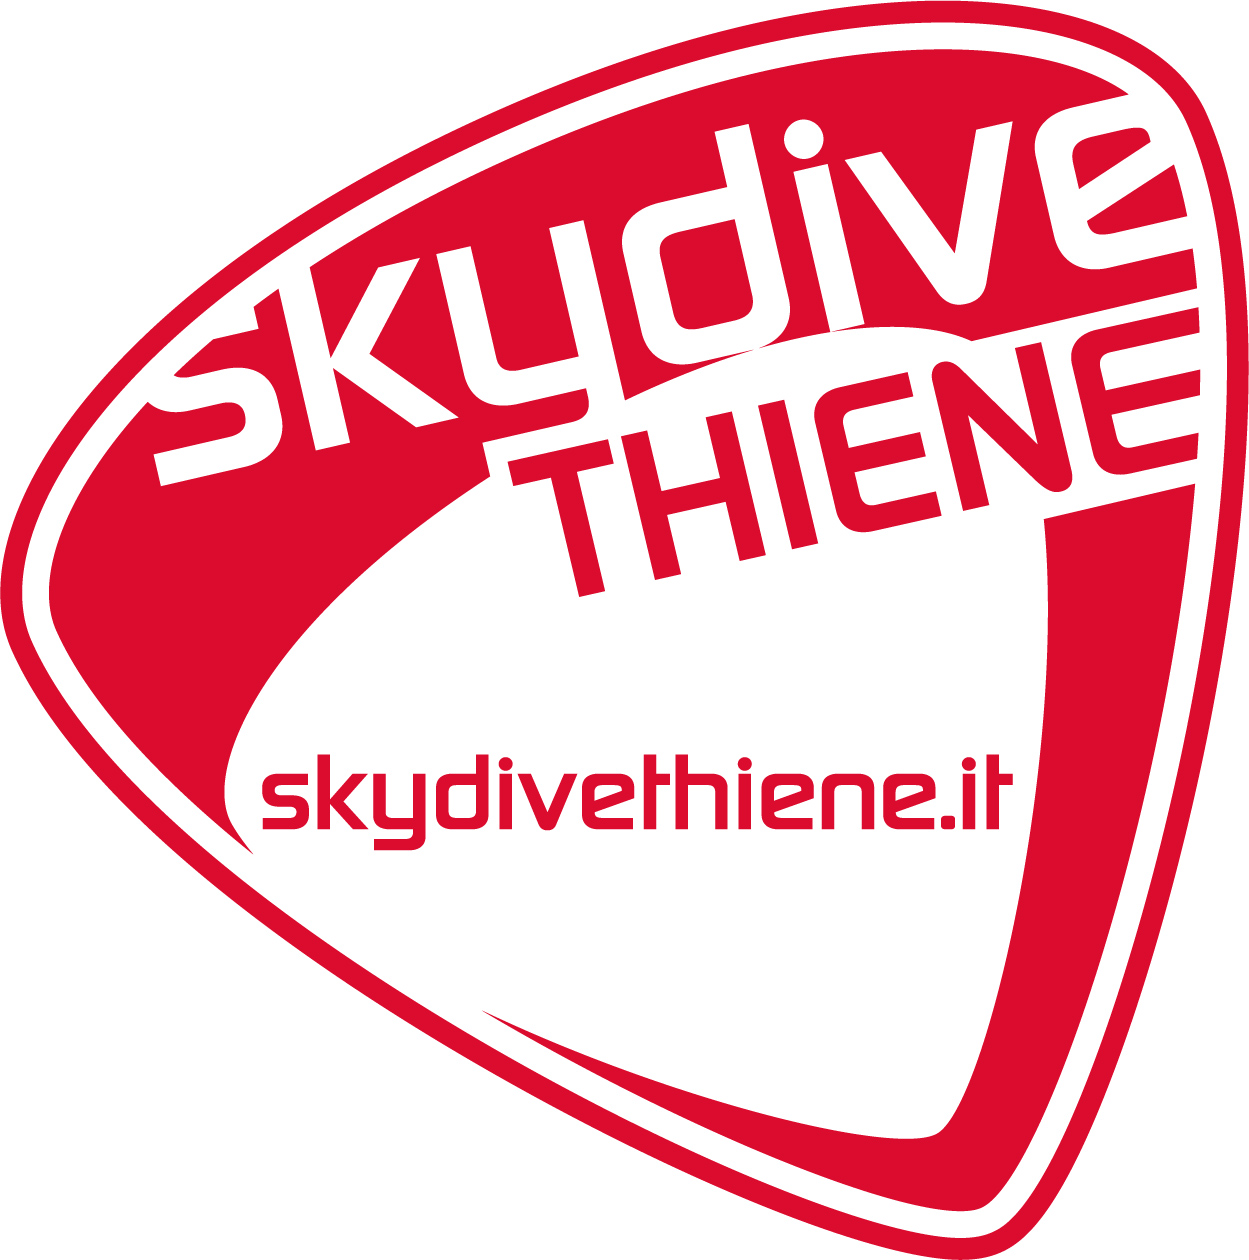 Skydive Thiene logo